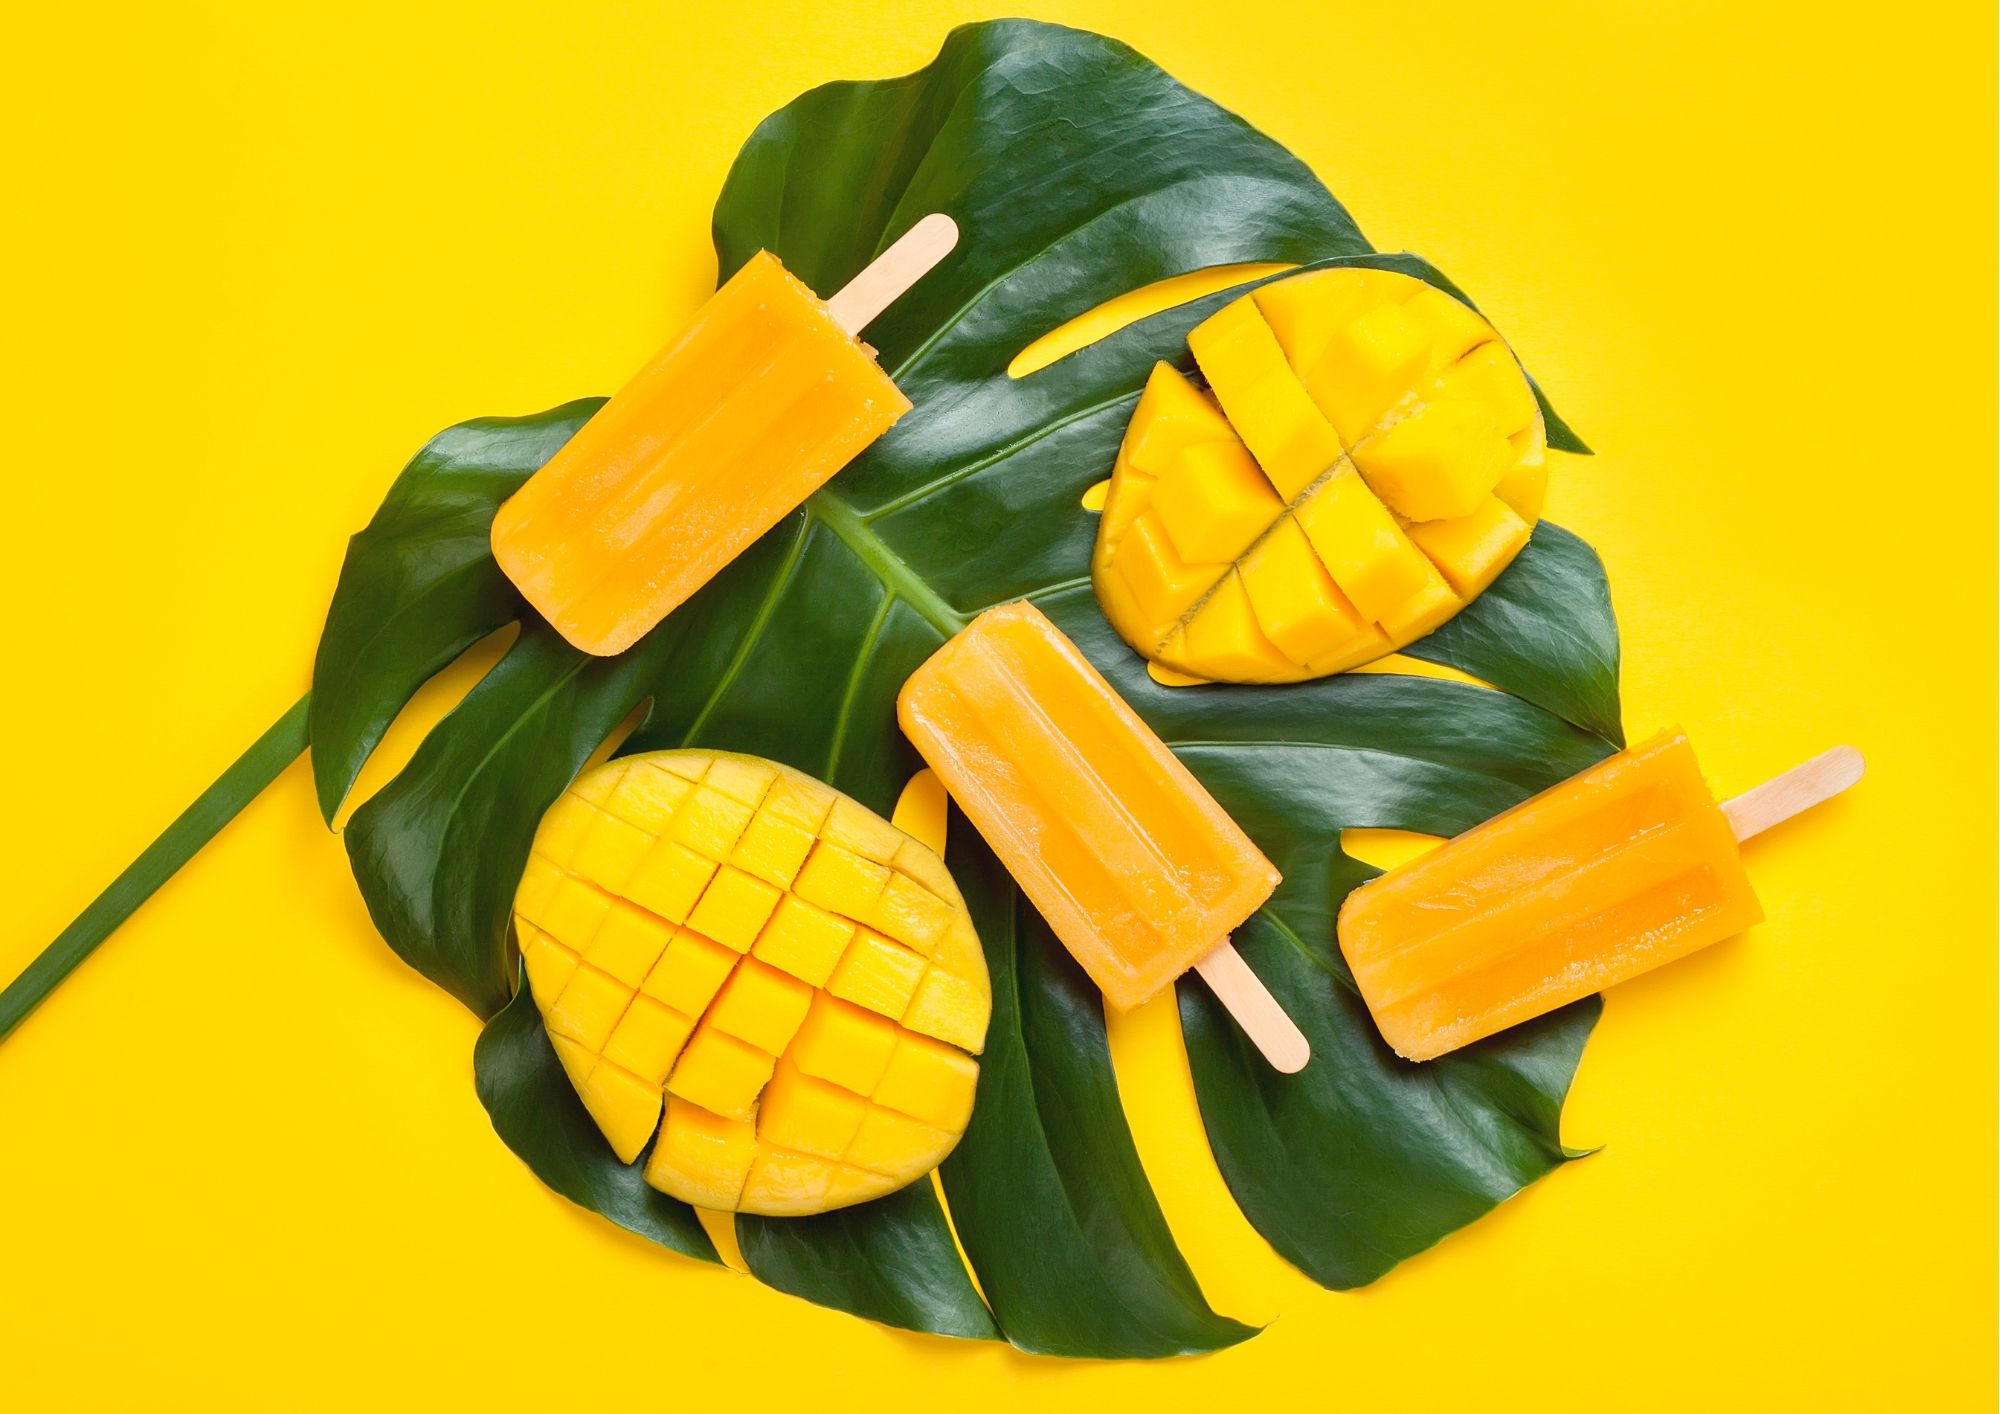 mango popsicles